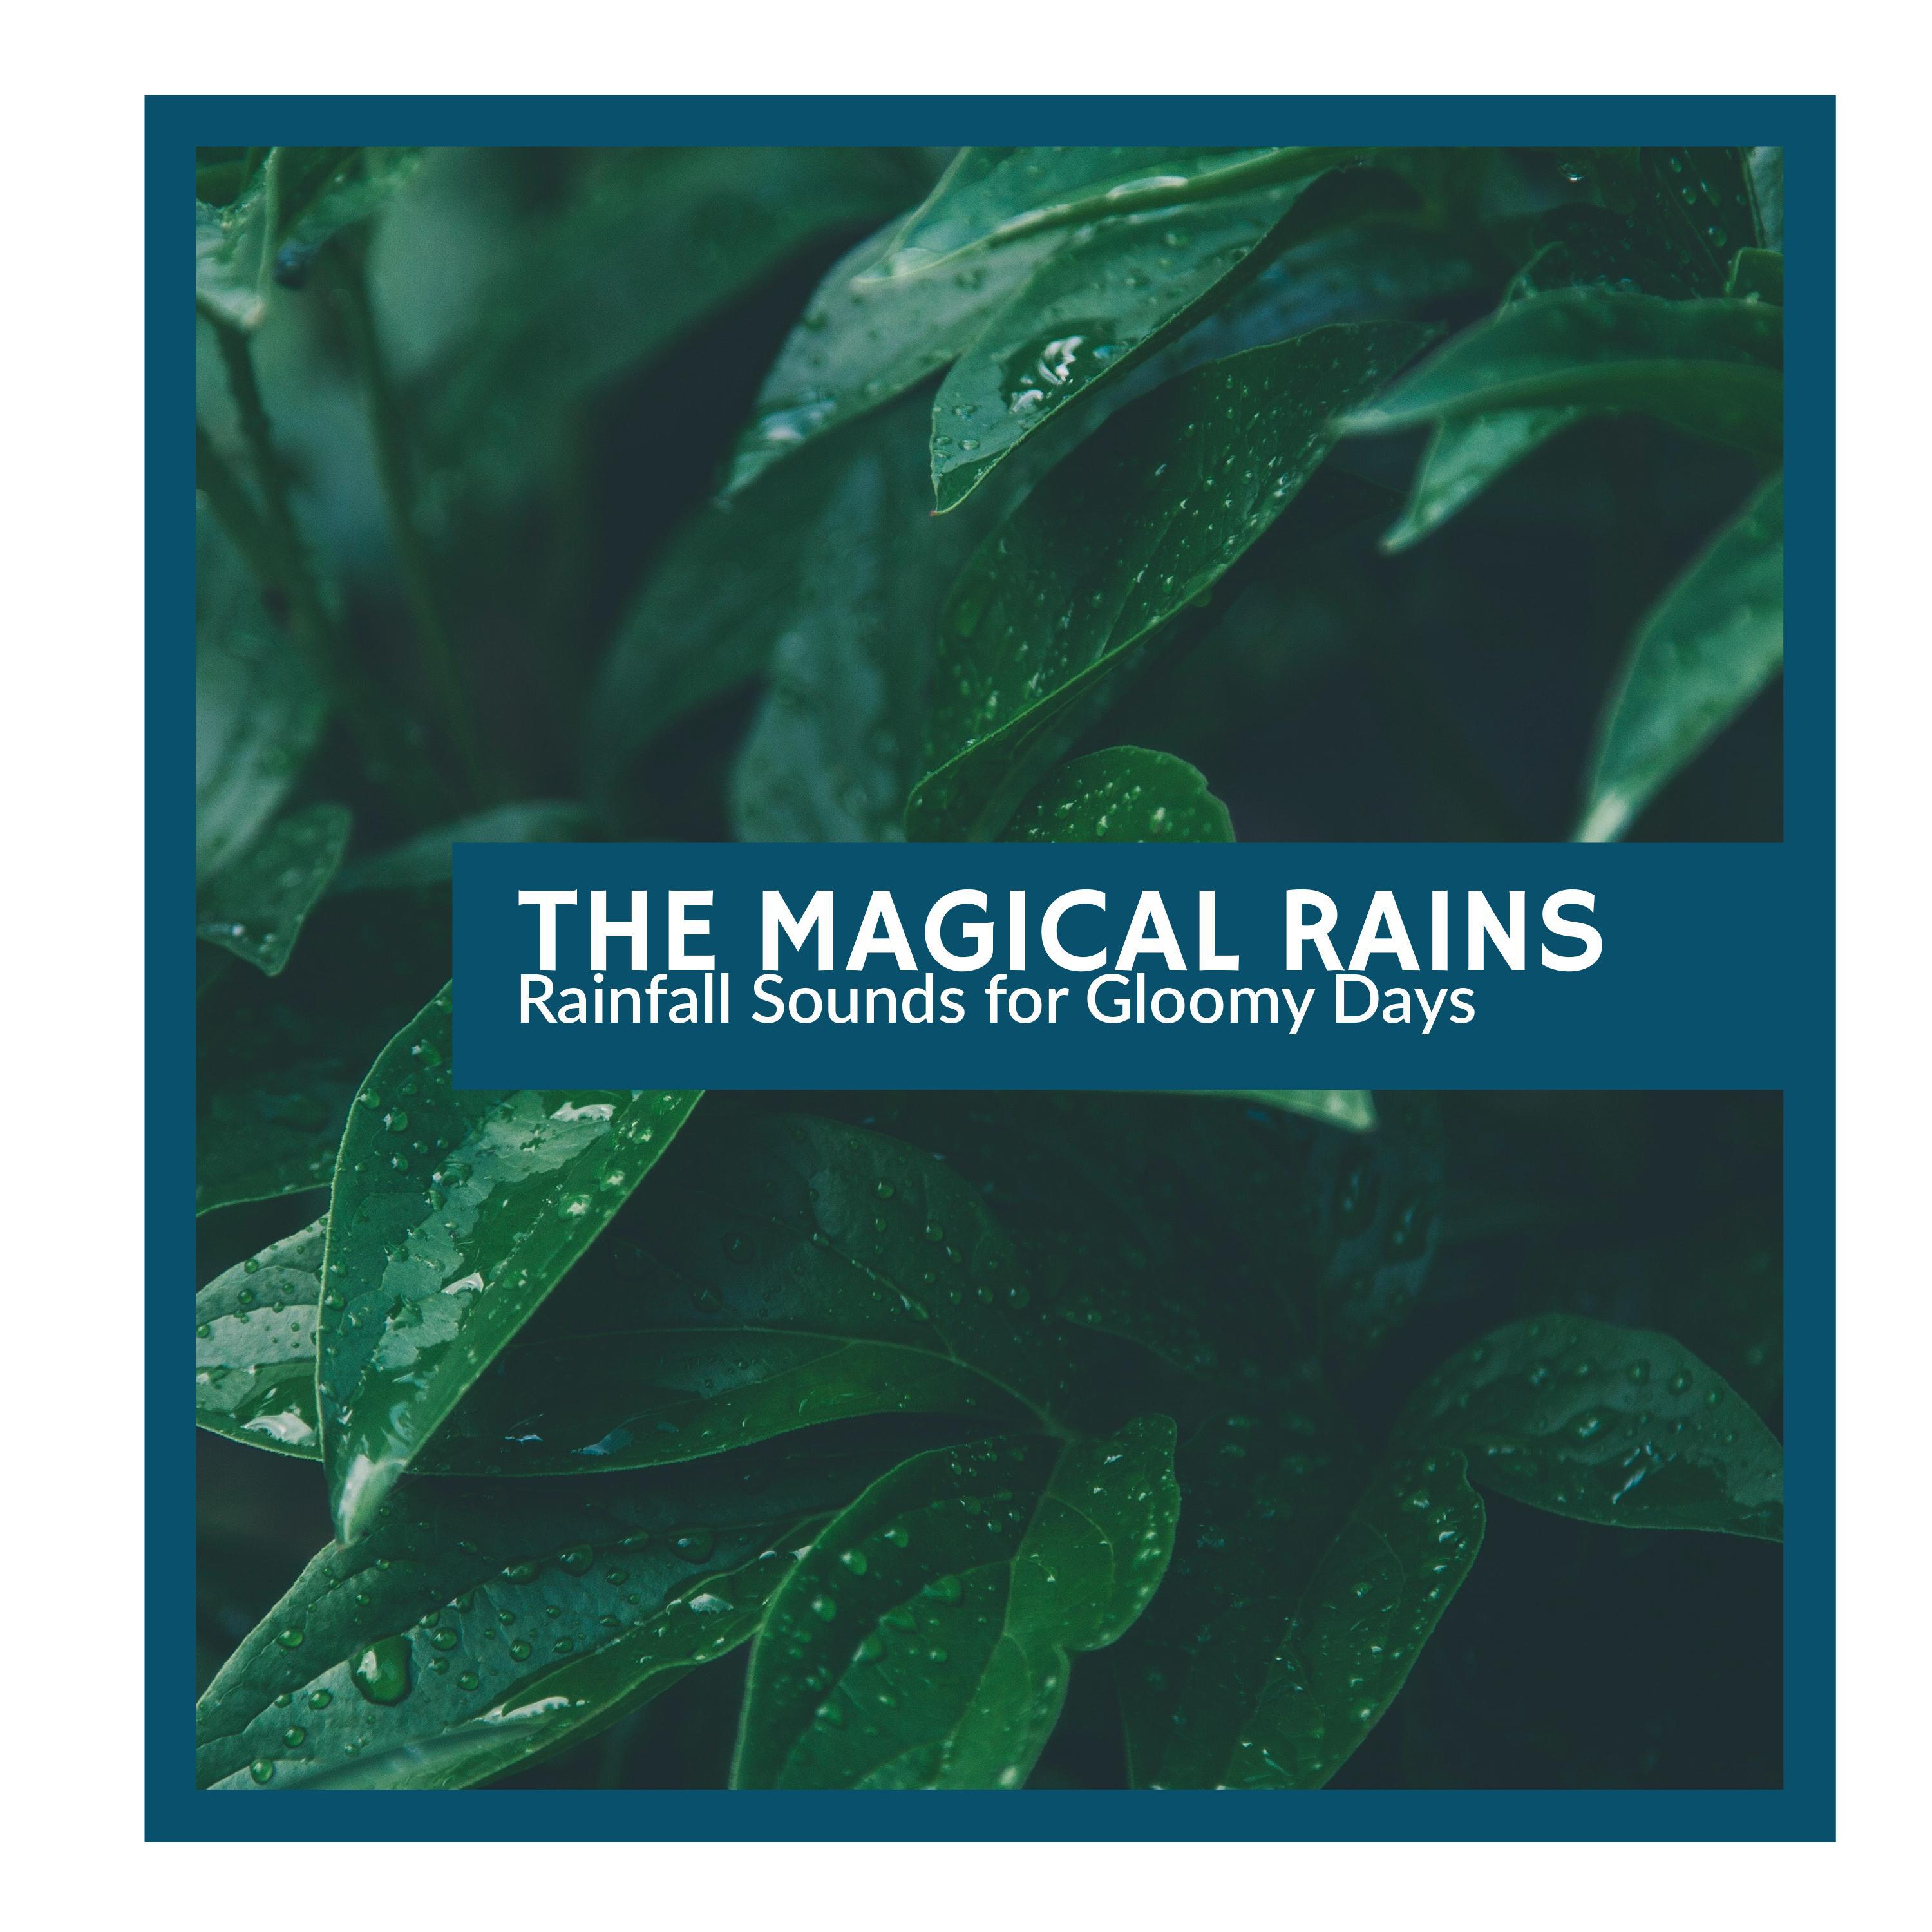 Grooming Rain Melodies - Rain of Love